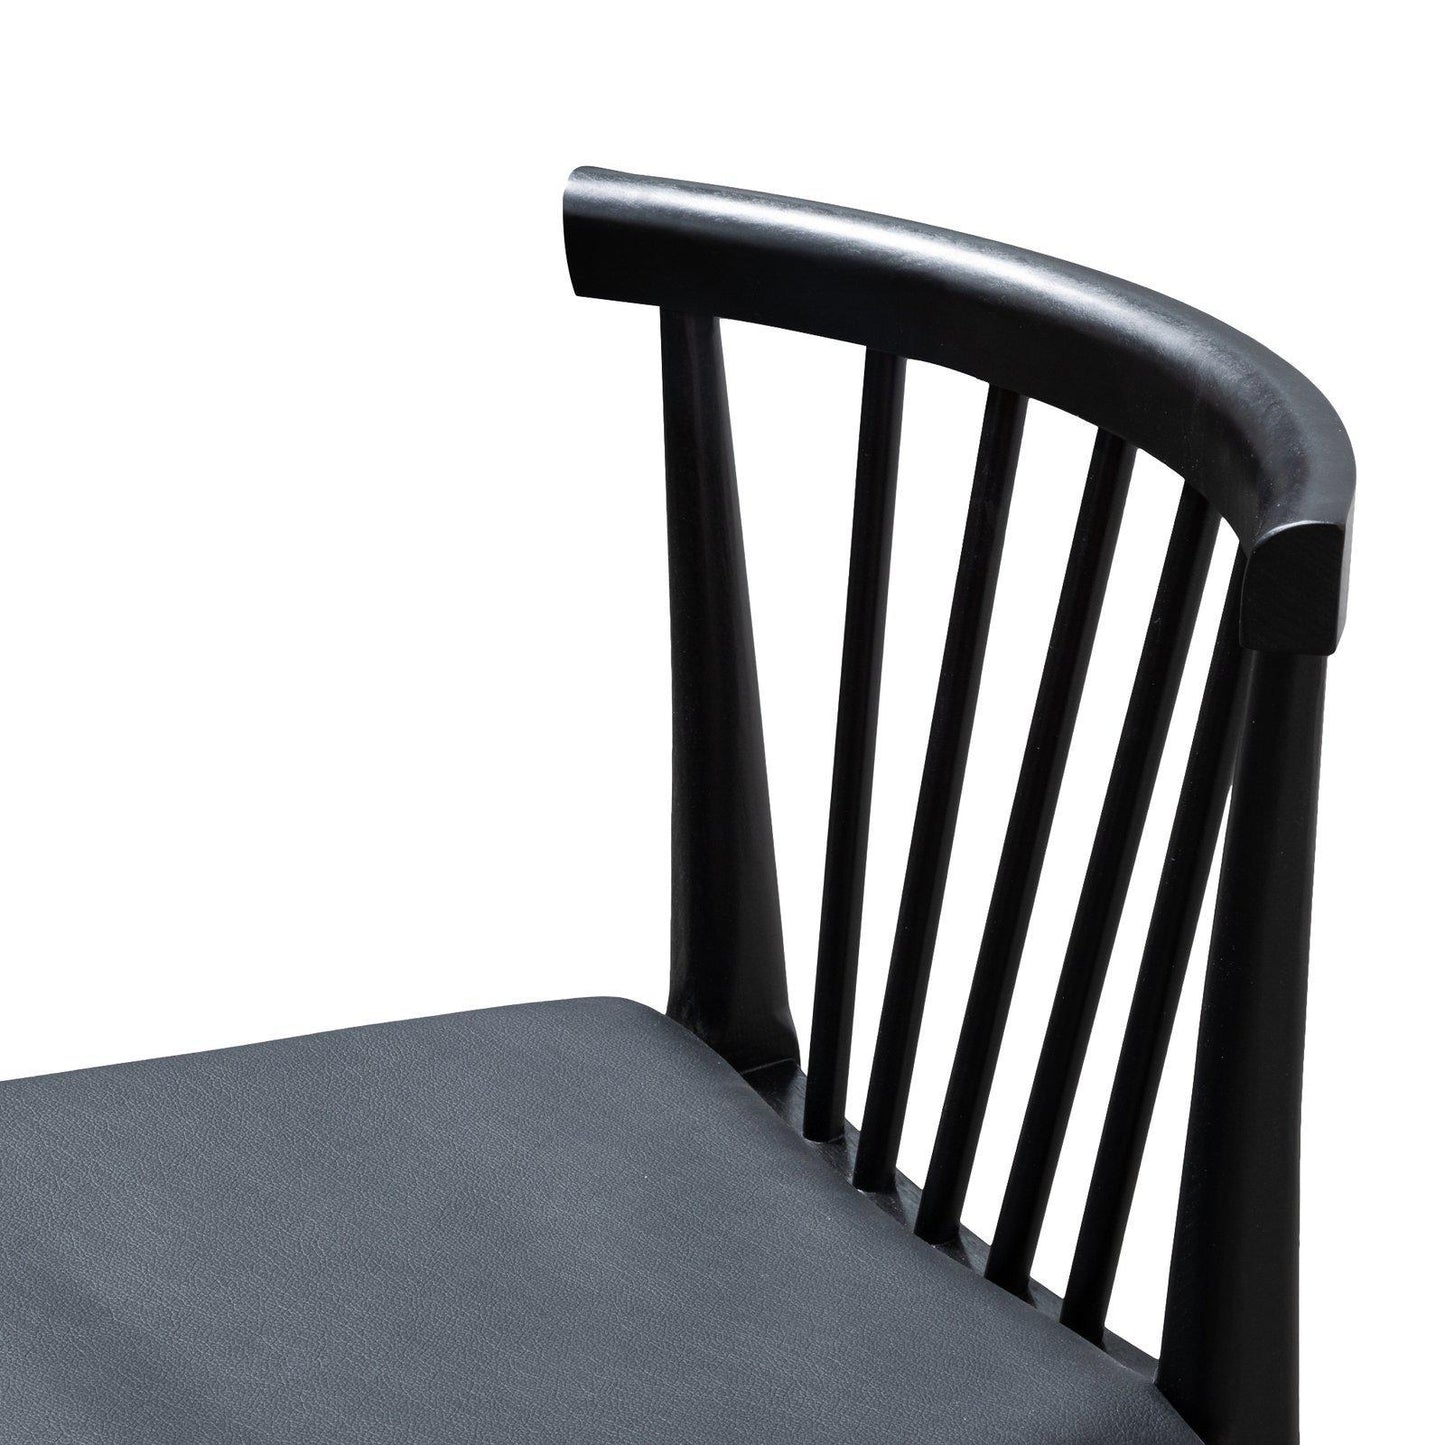 Barrington | Black Wooden Dining Chairs | Set Of 2 | Black